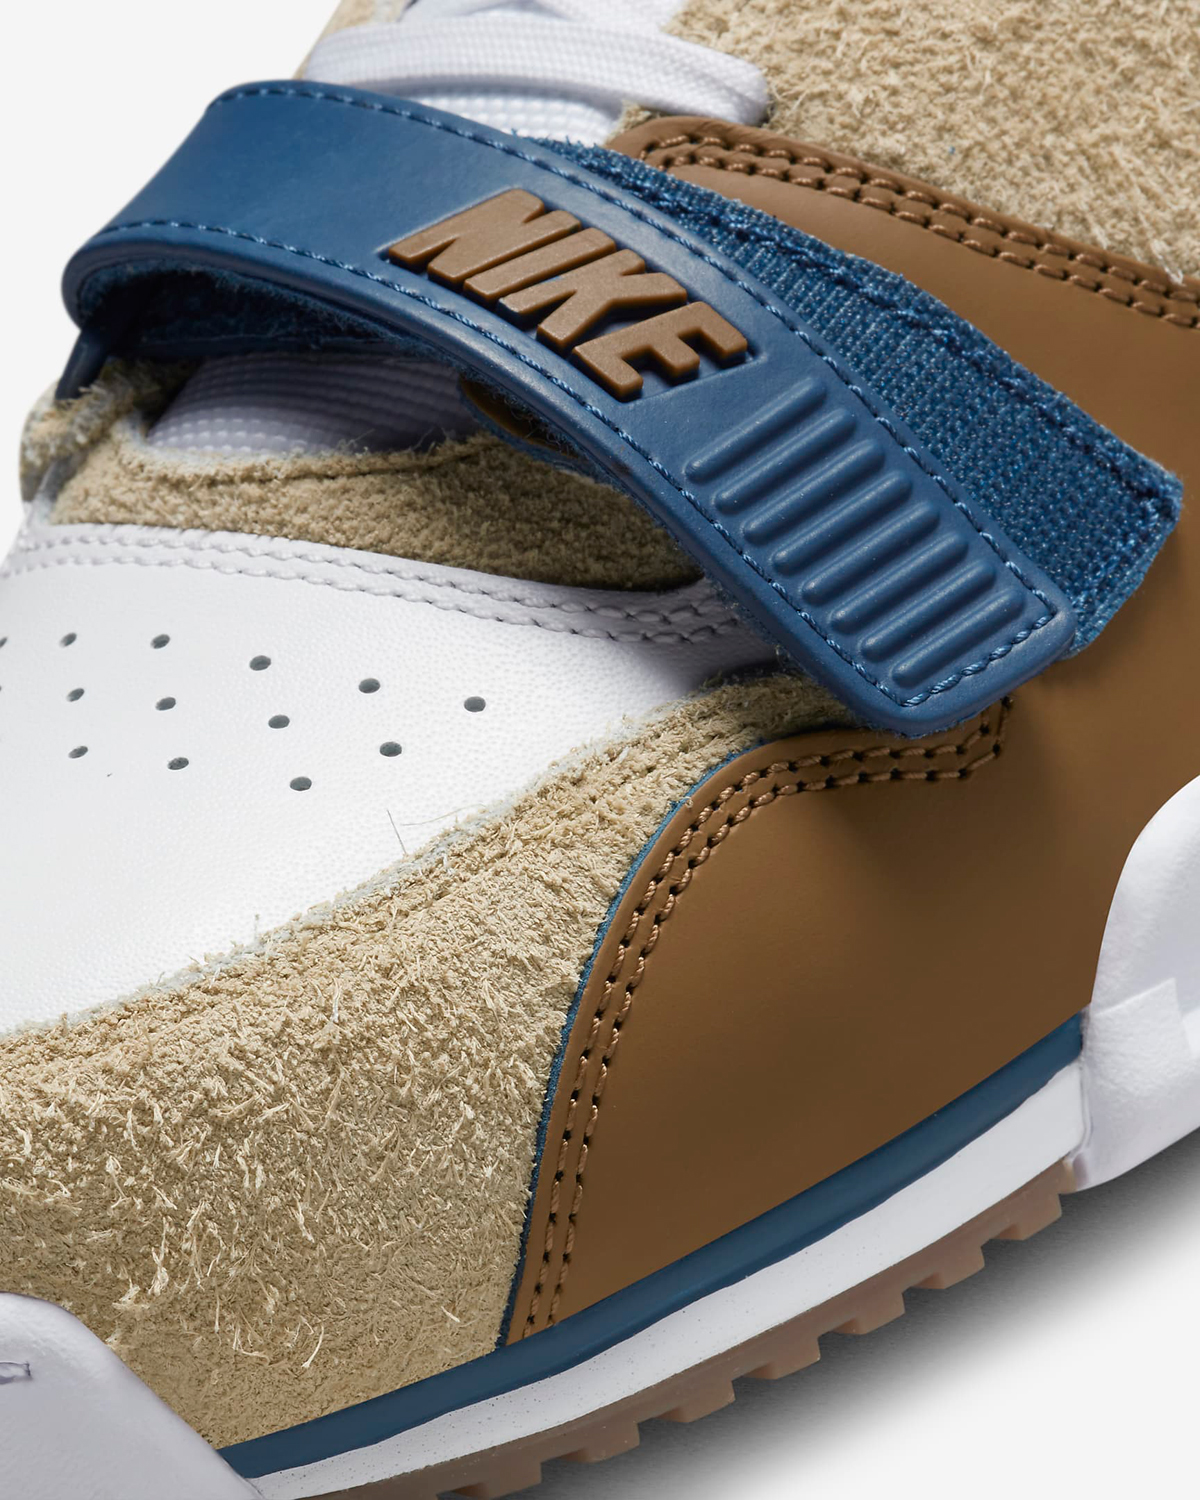 Nike-Air-Trainer-1-Limestone-Ale-Brown-Valerian-Blue-Release-Date-7